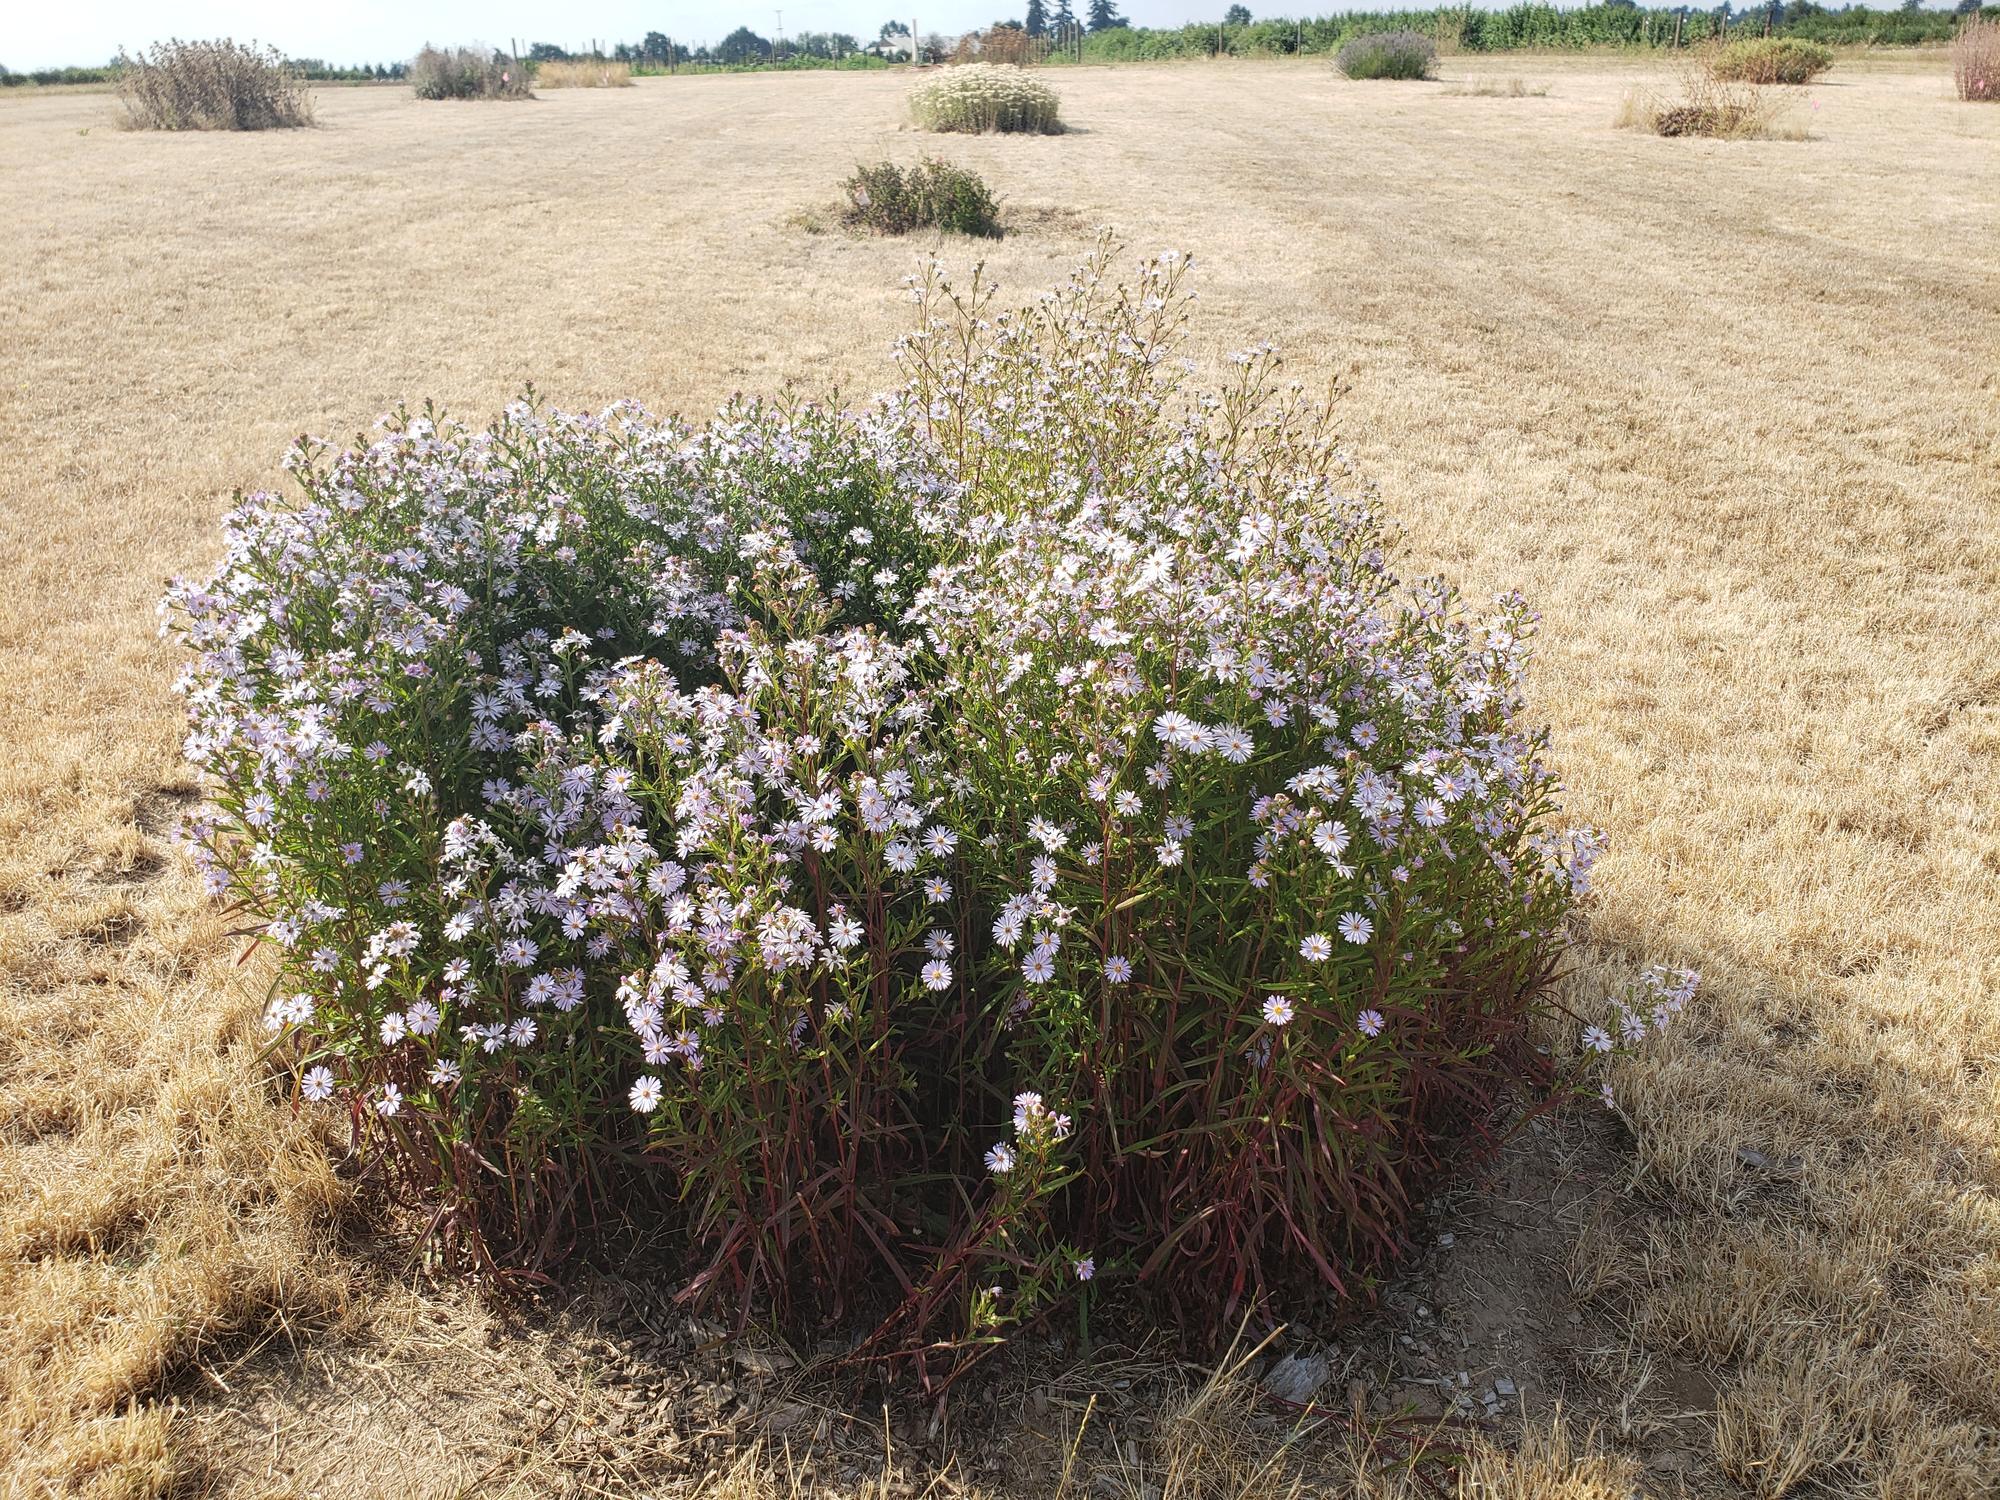 Douglas aster in full bloom in large dry field.